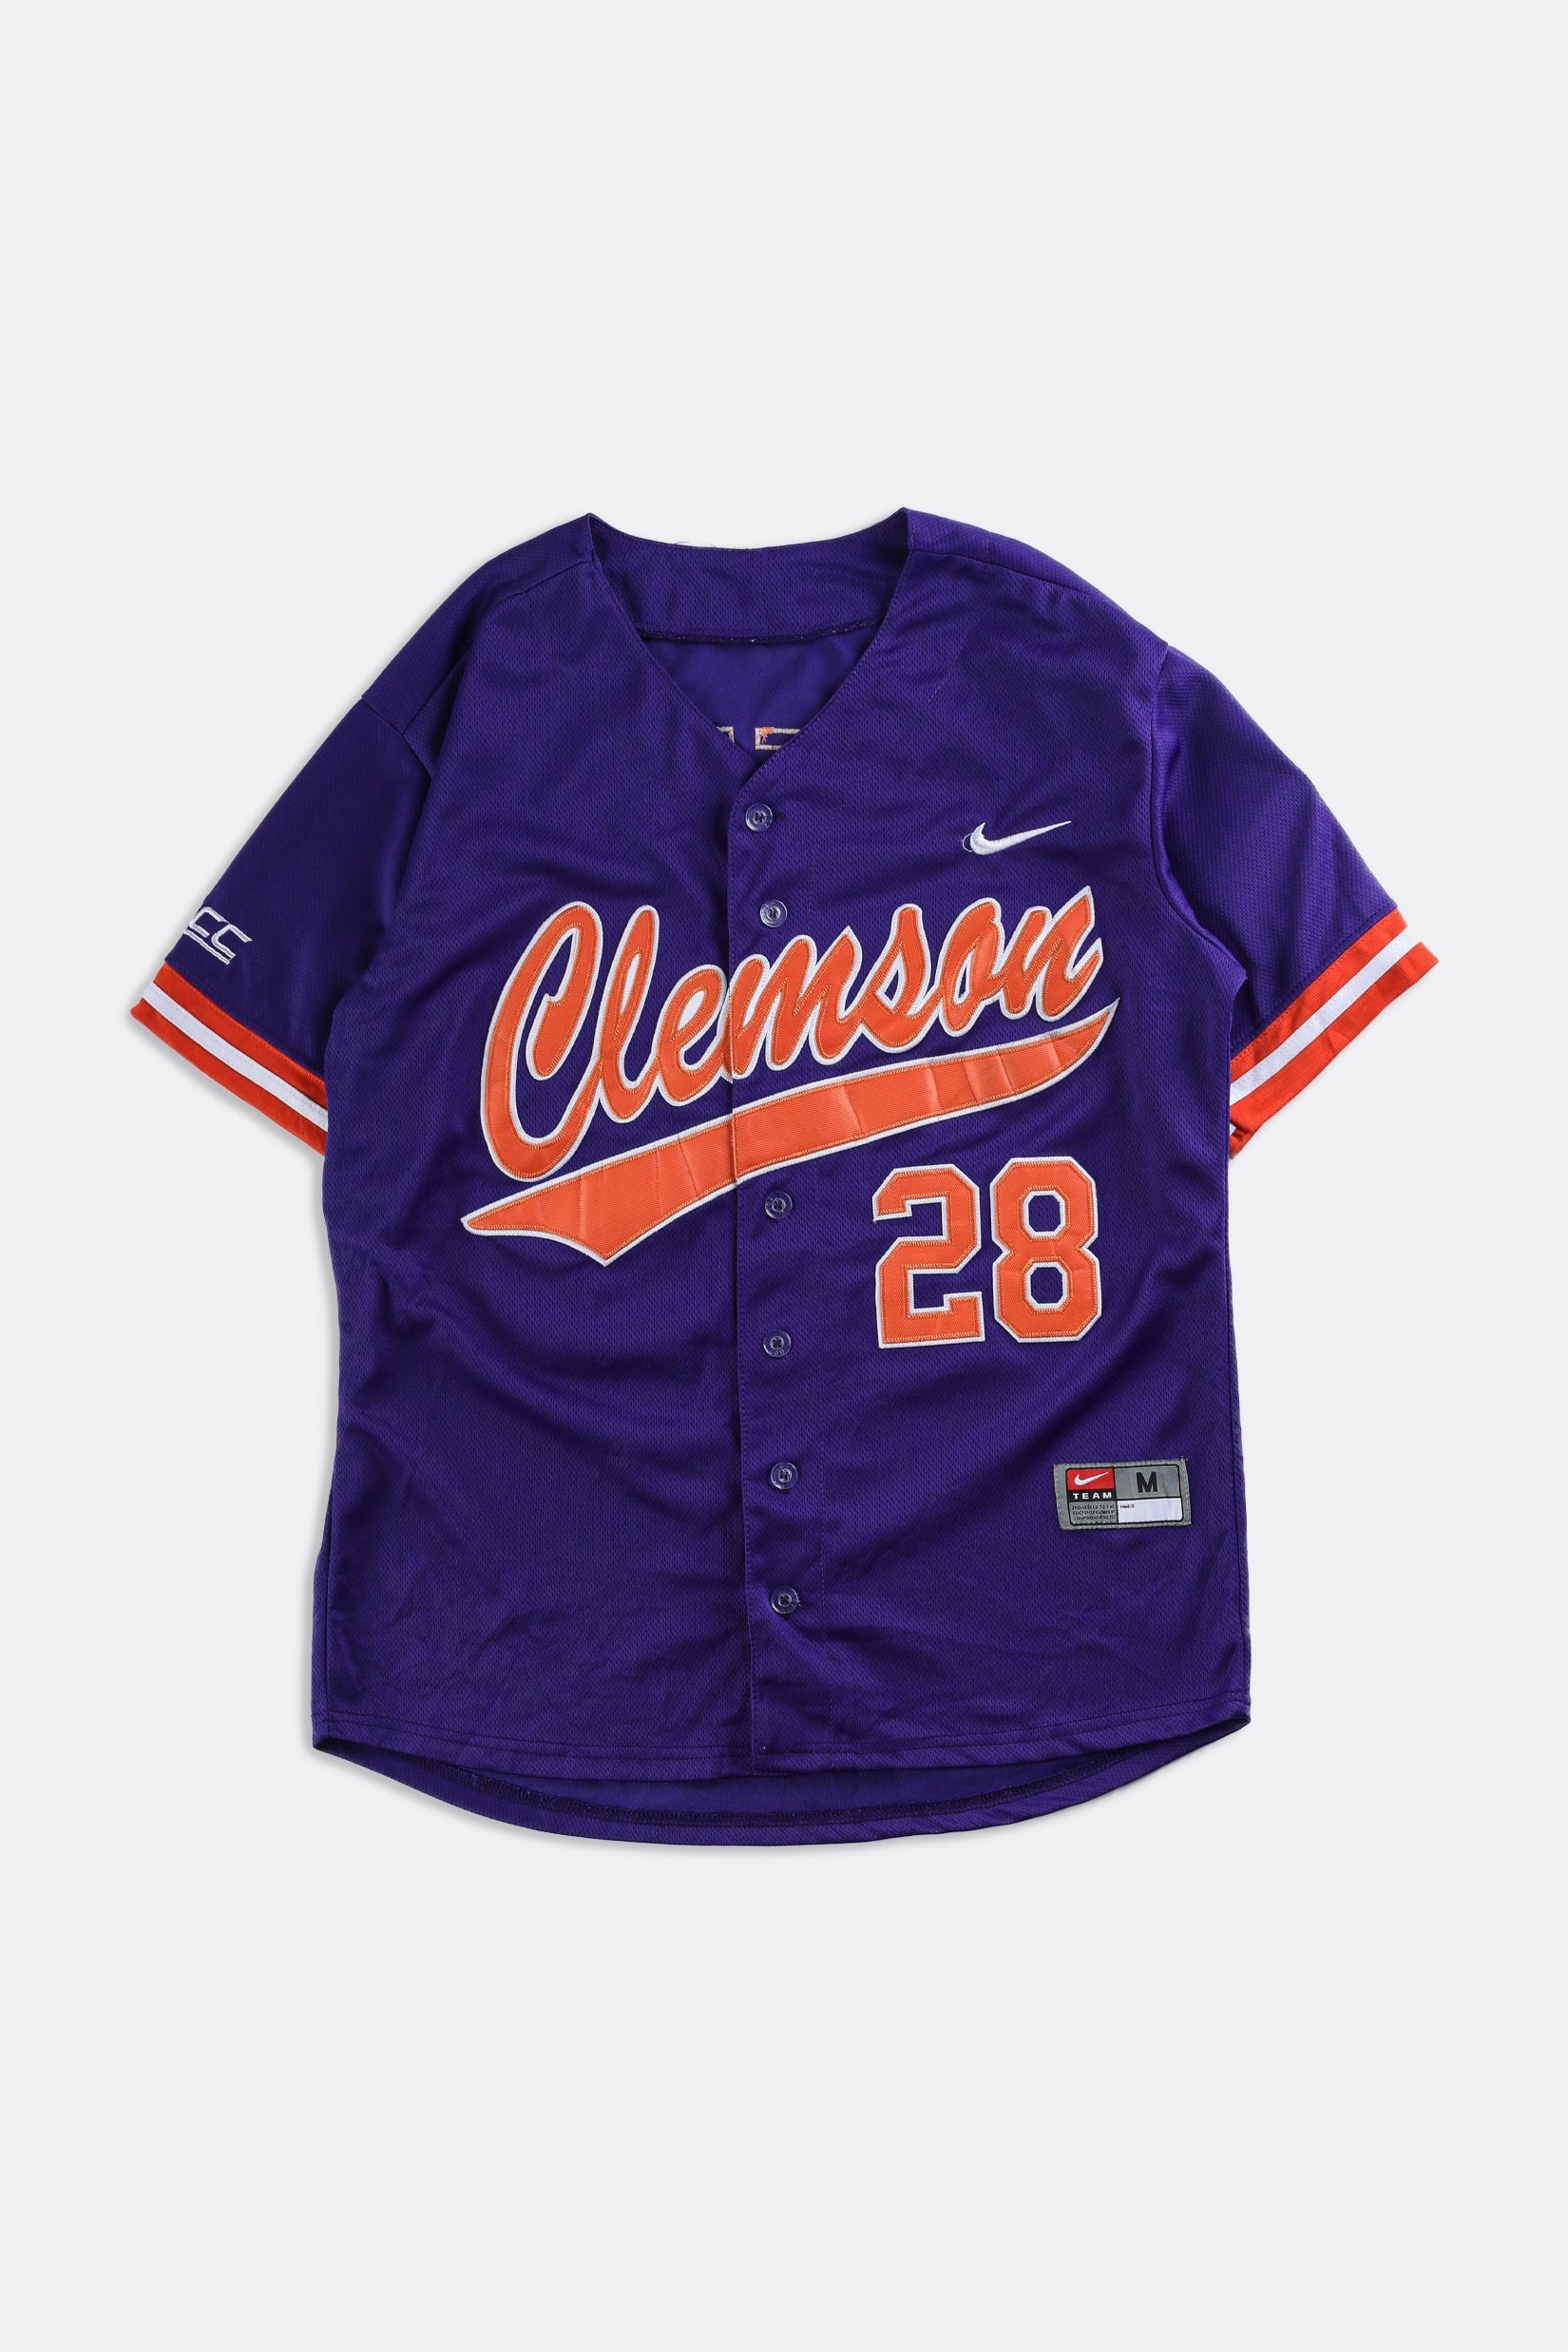 Vintage Clemson Tigers Collegiate Baseball Jersey – Cerqular